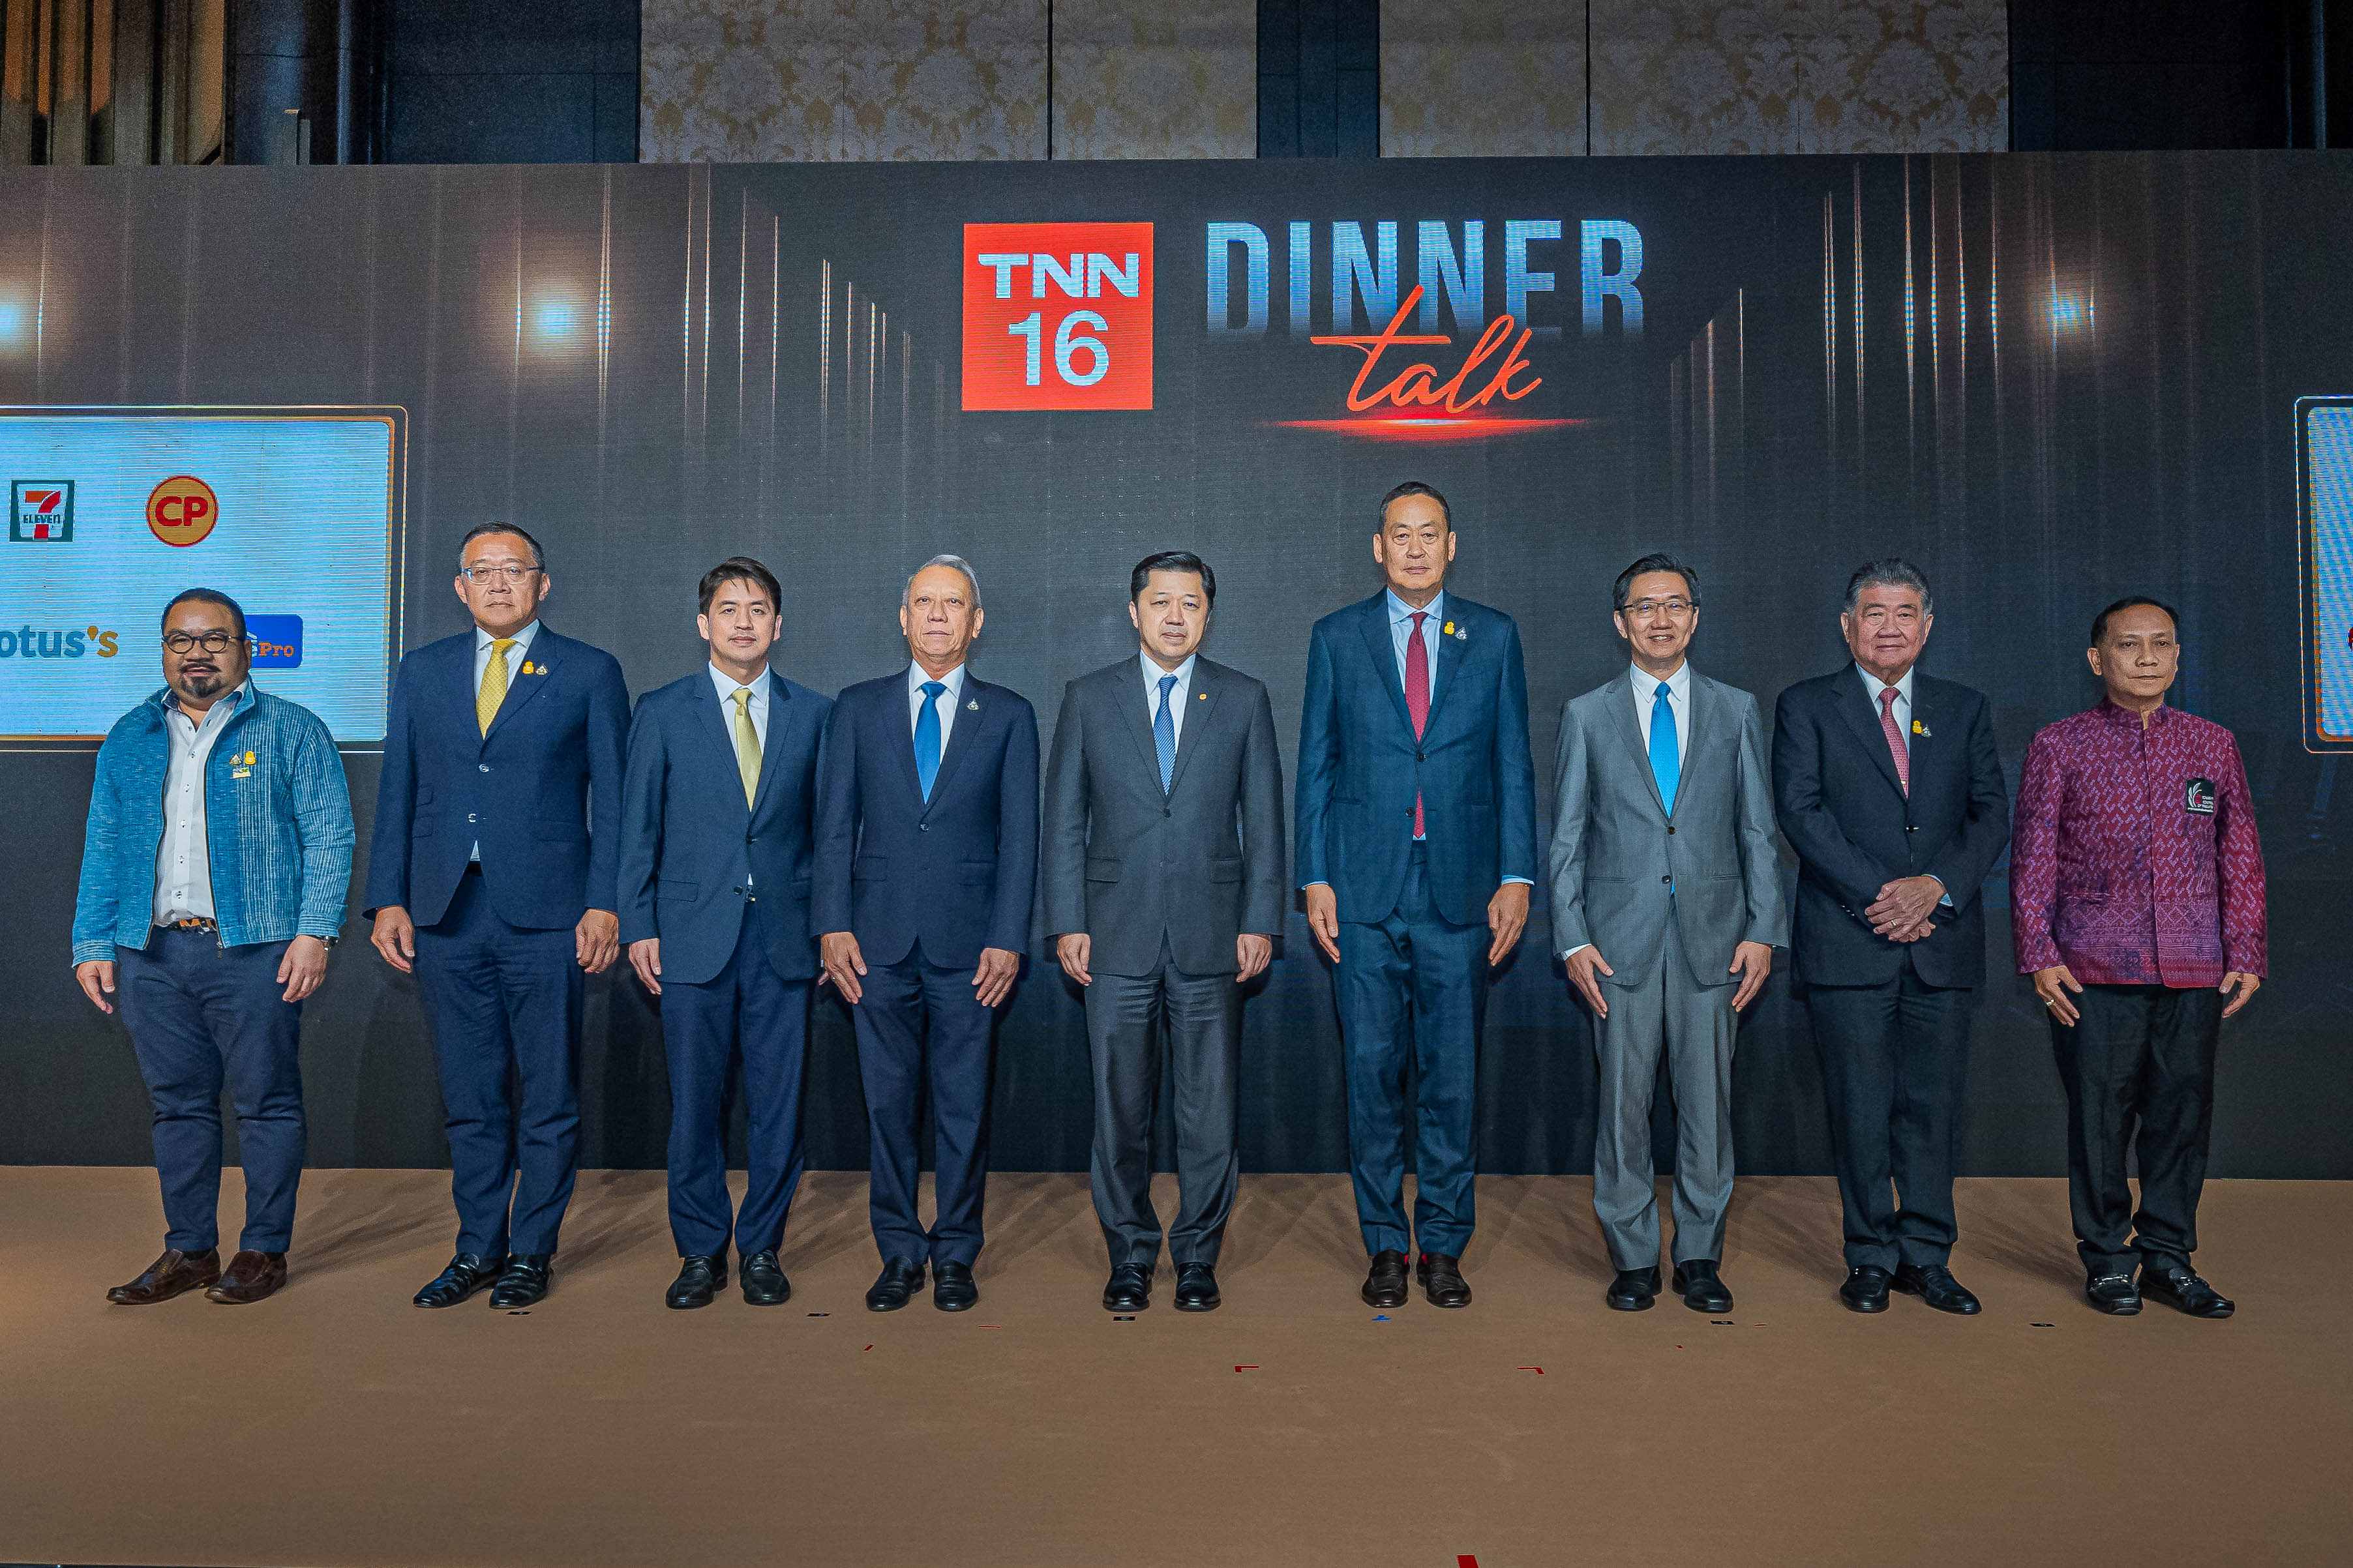 TNN ช่อง 16 เปิดเวทีแสดงวิสัยทัศน์  ในงาน Dinner Talk 'Thailand Level Up' โดย นายกฯ เศรษฐา ทวีสิน